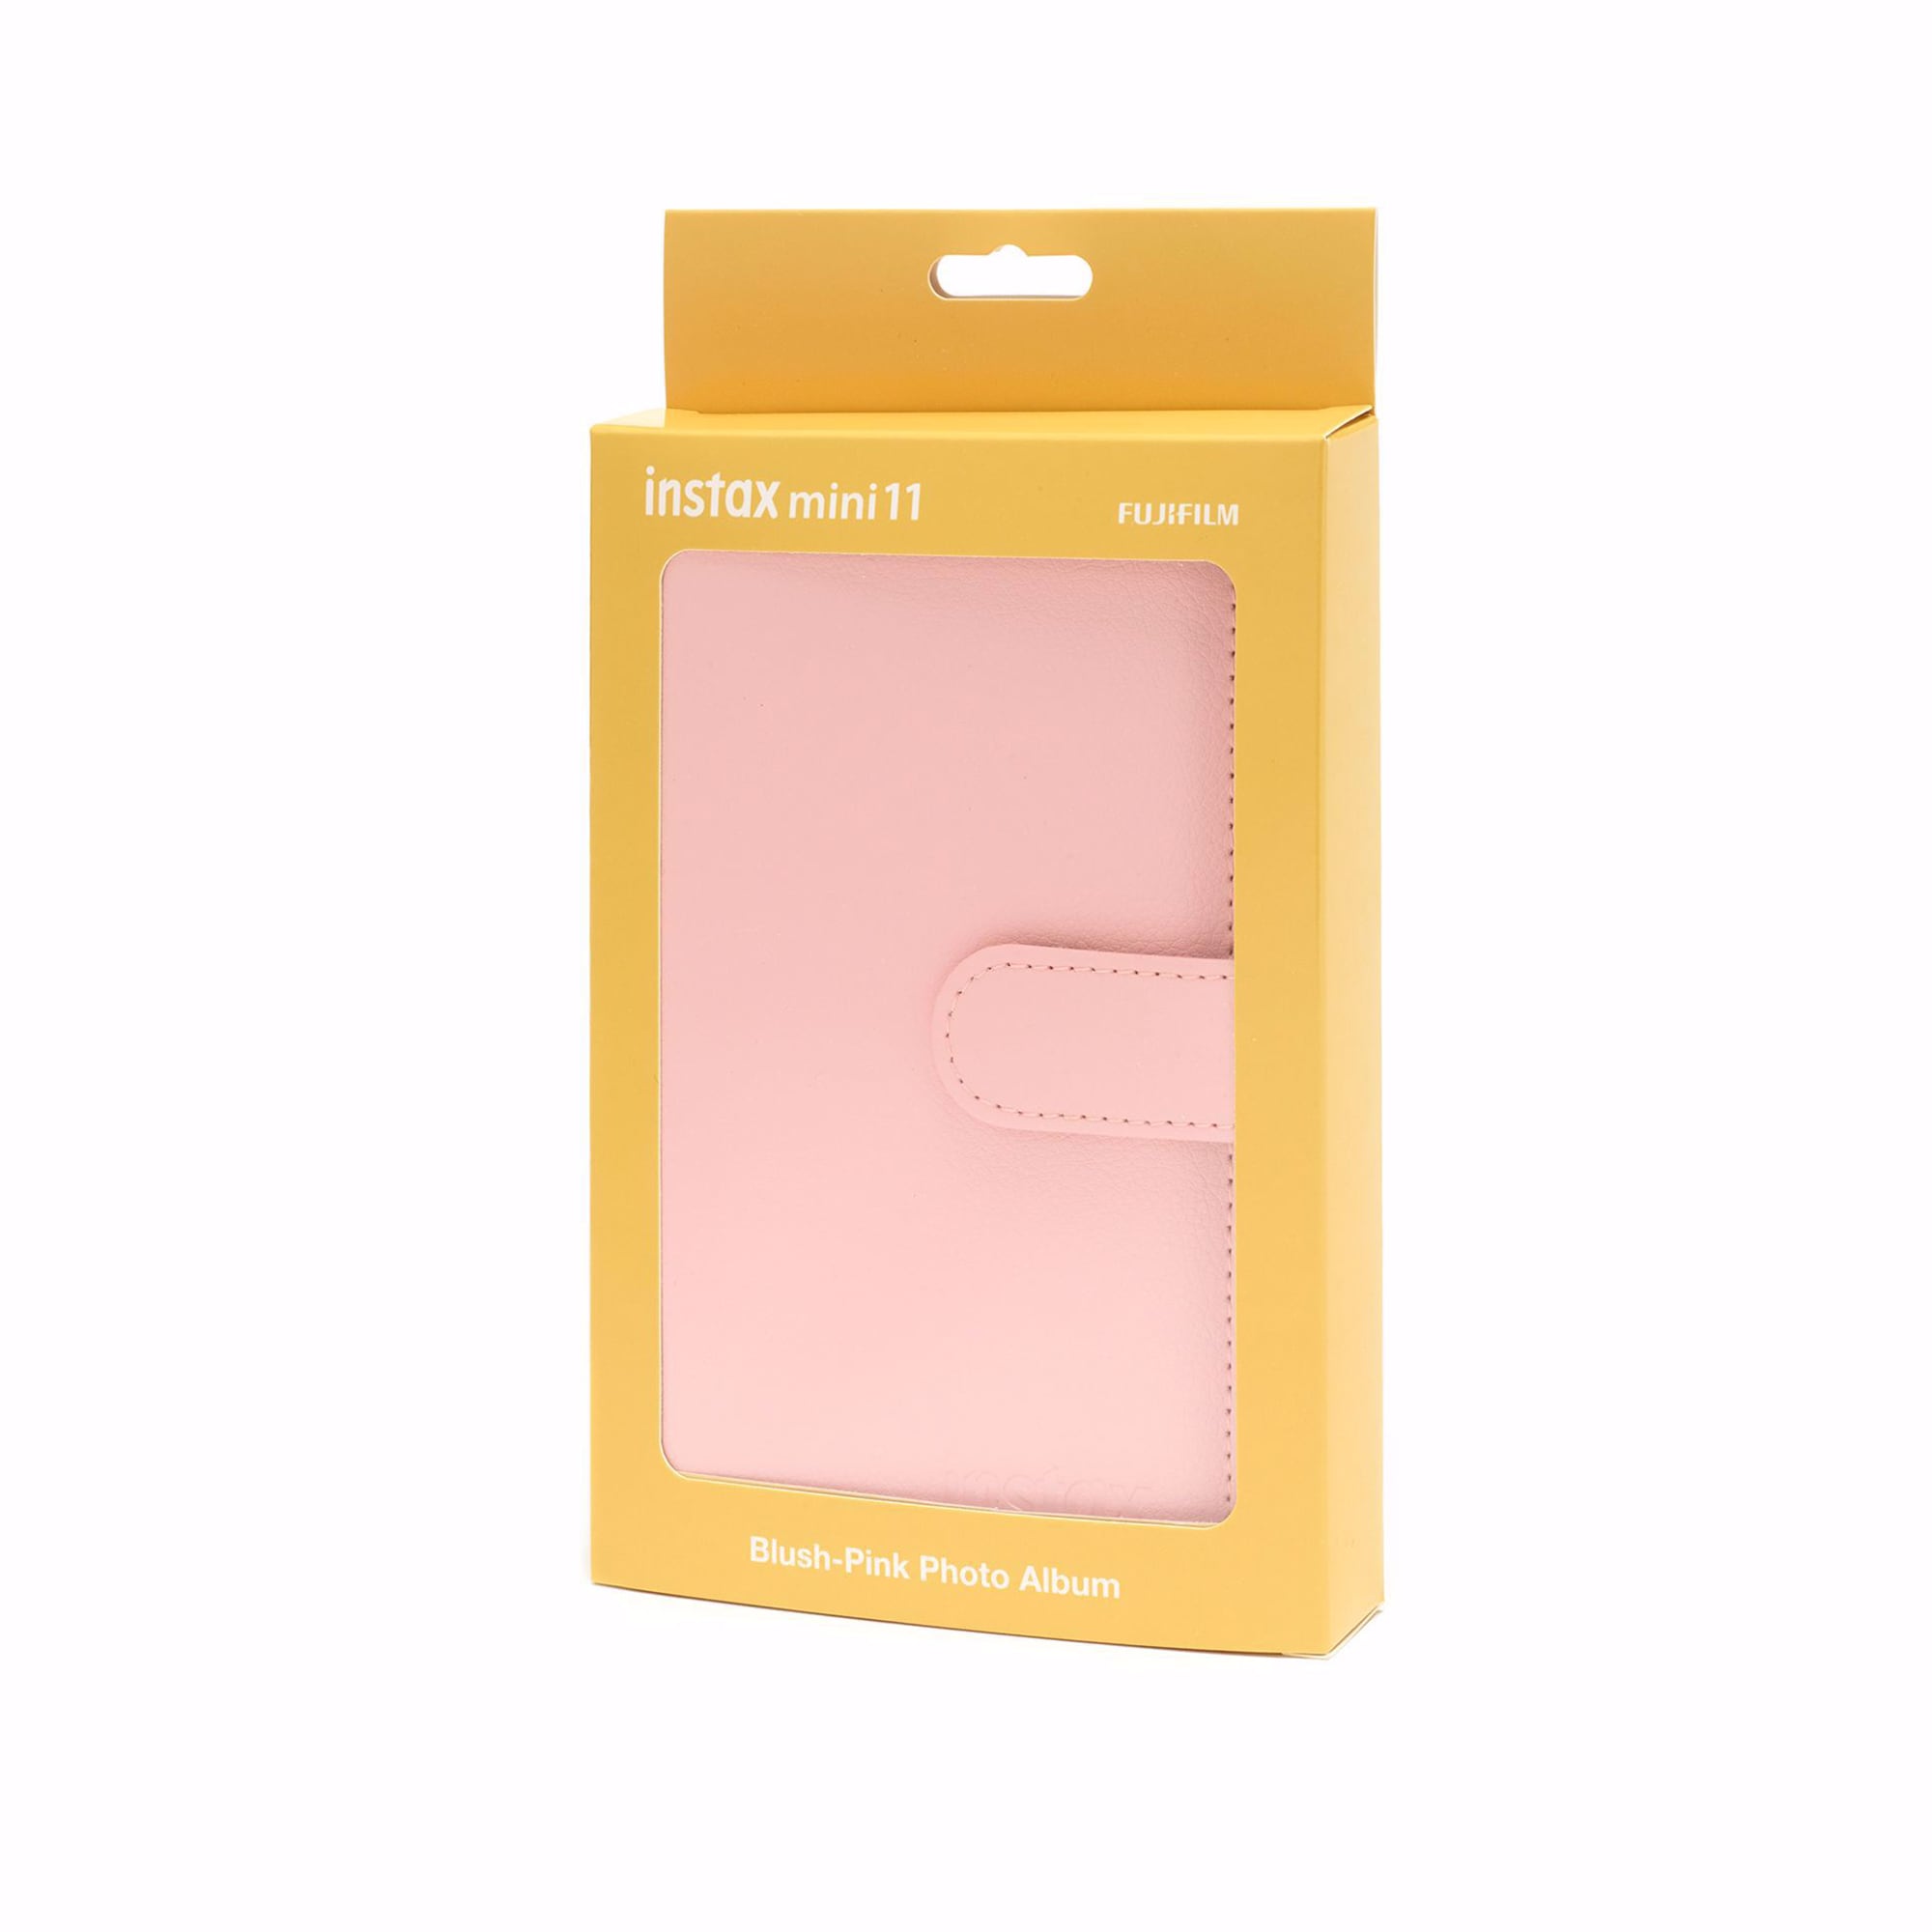 Fujifilm Instax Mini Album Blush-Pink